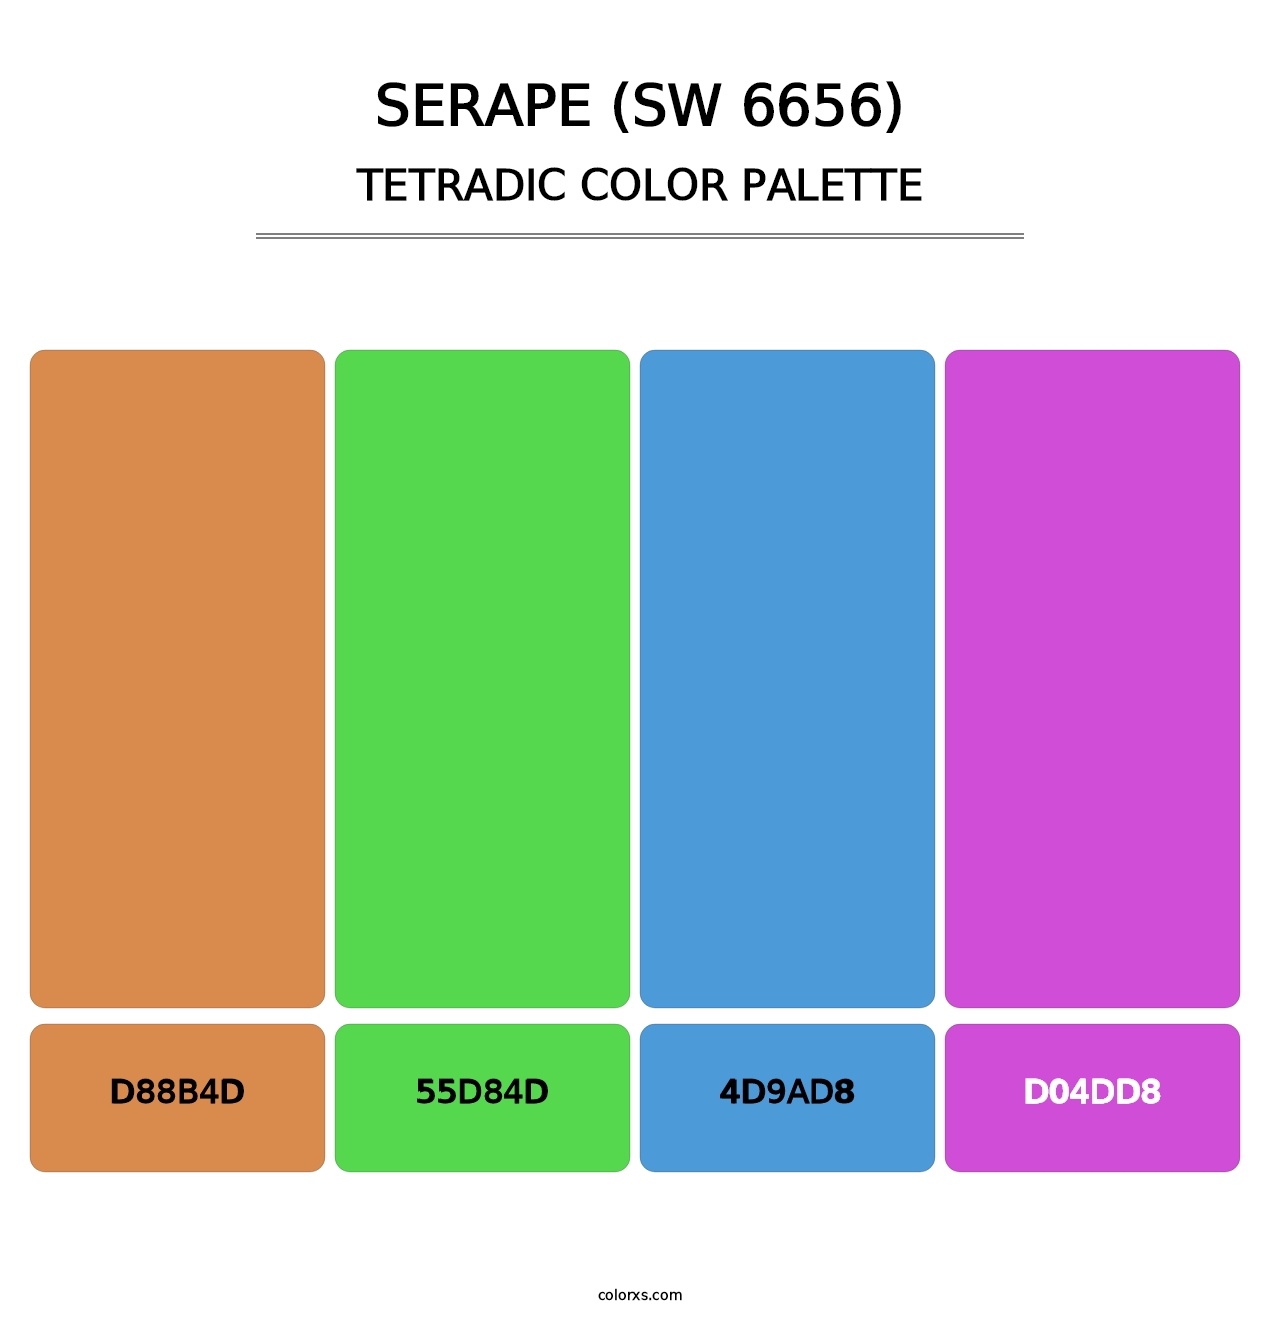 Serape (SW 6656) - Tetradic Color Palette